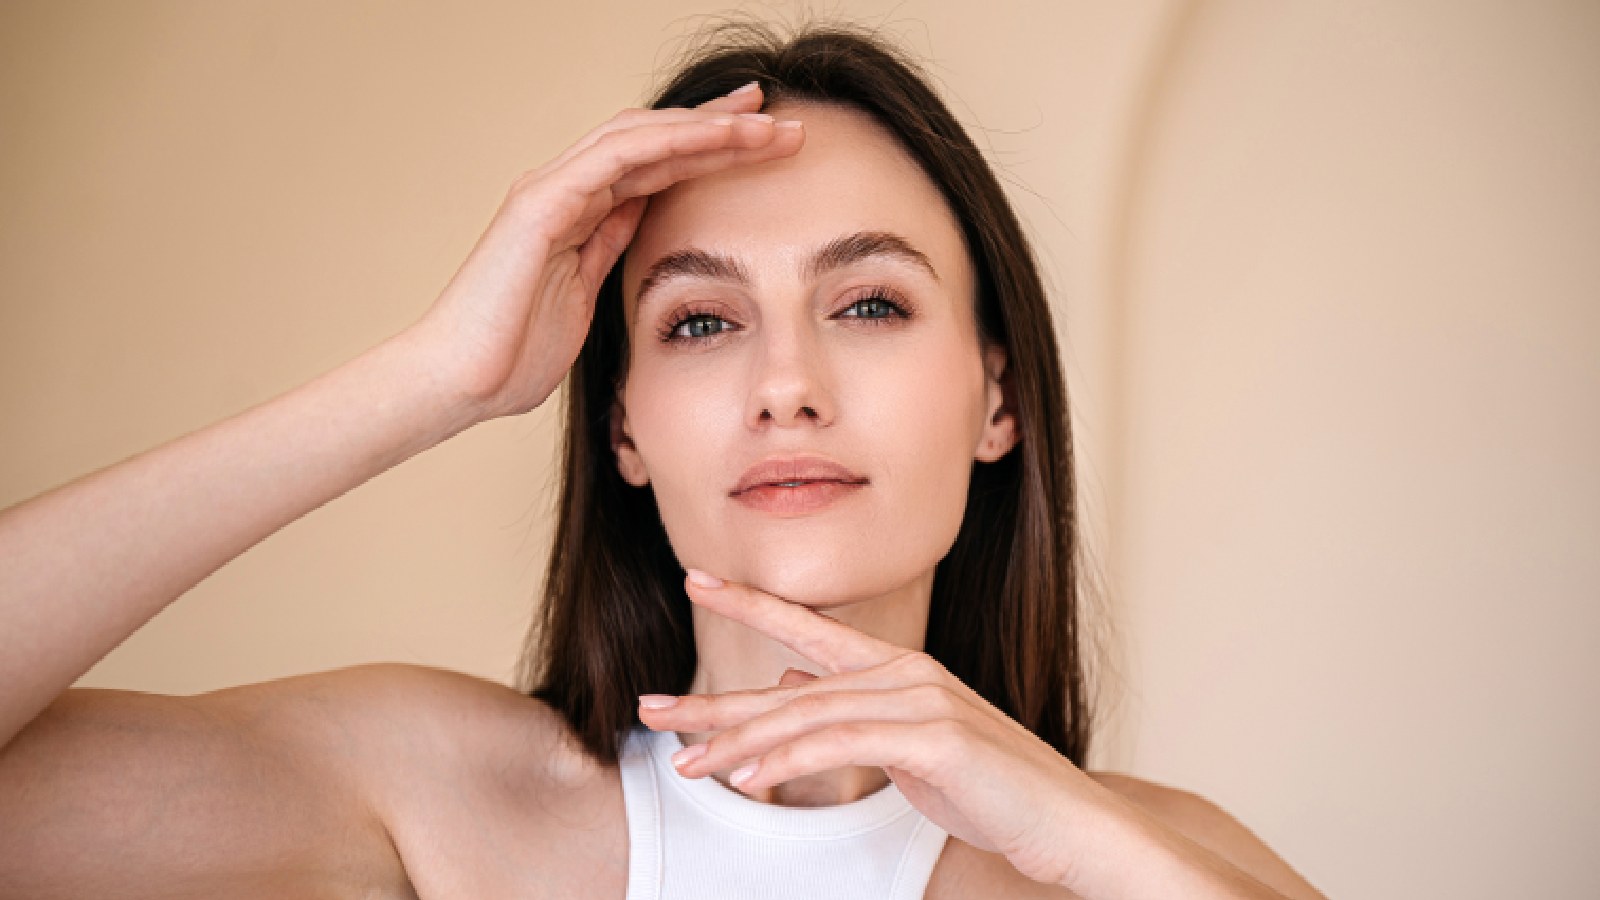 Follow these 5 expert tips regularly for better skin health.